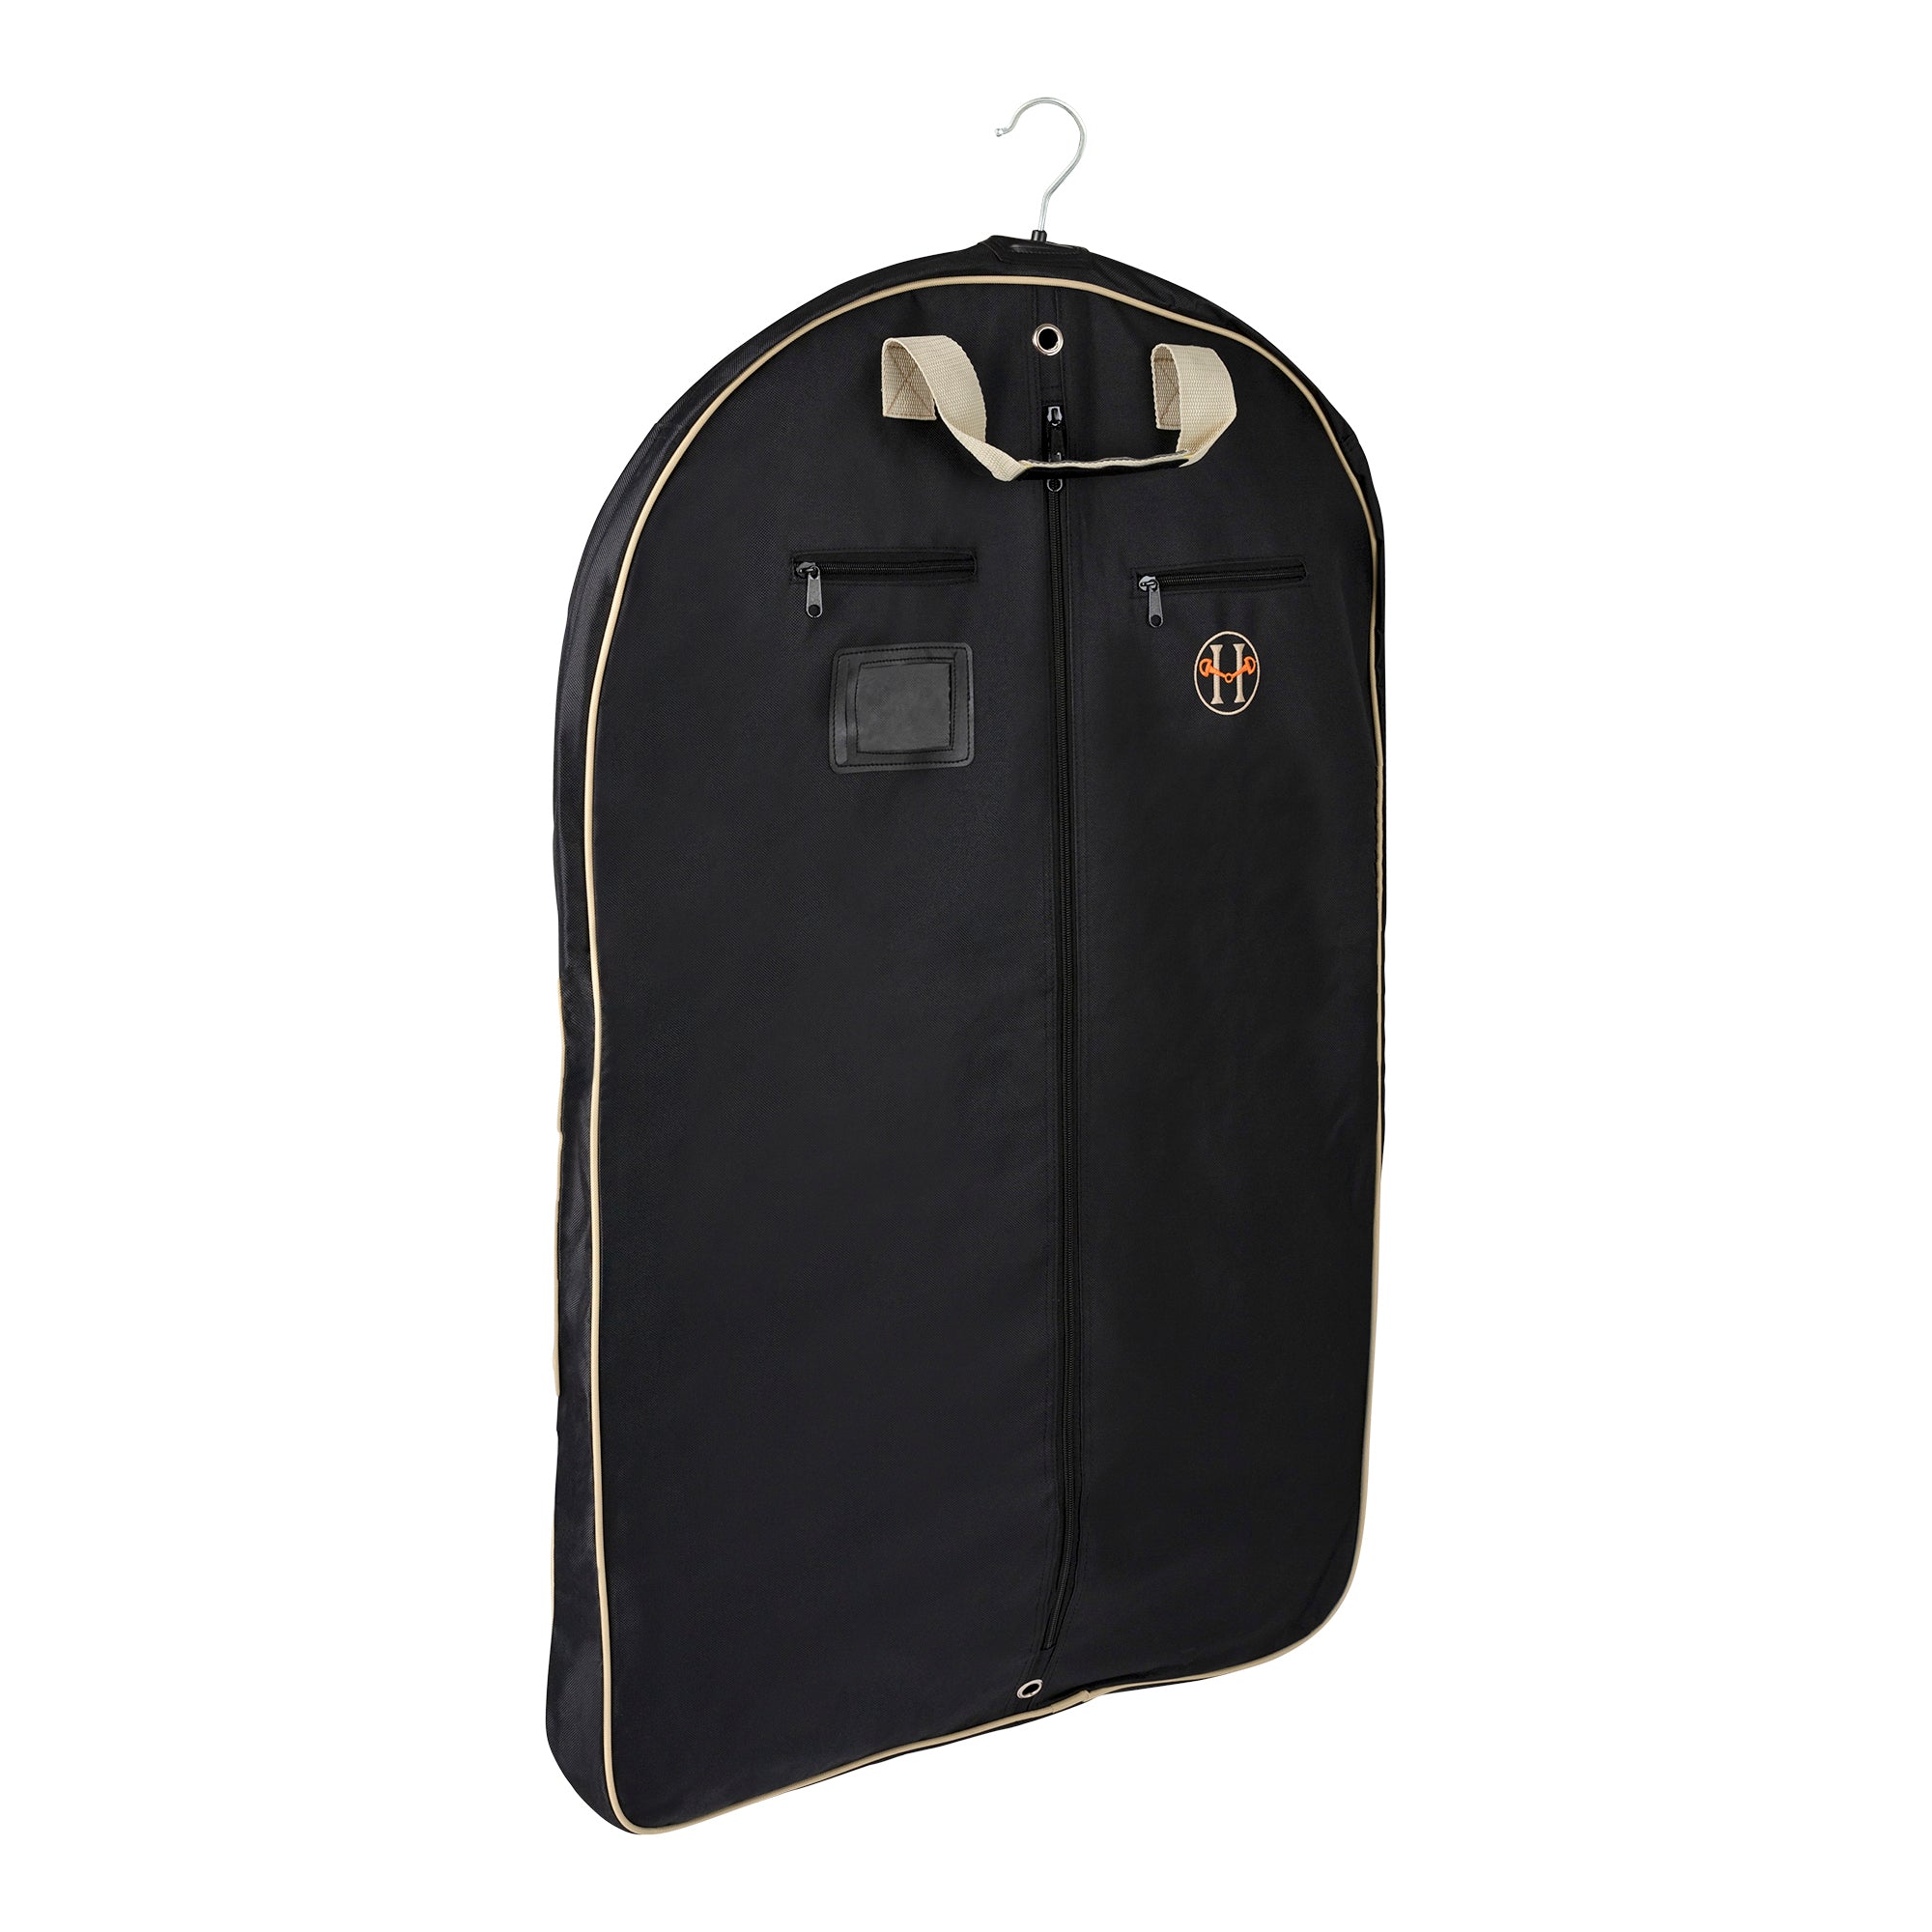 R.J. Toomey Black, 65 Long Vestment/Garment Travel Bag - AngelDirect